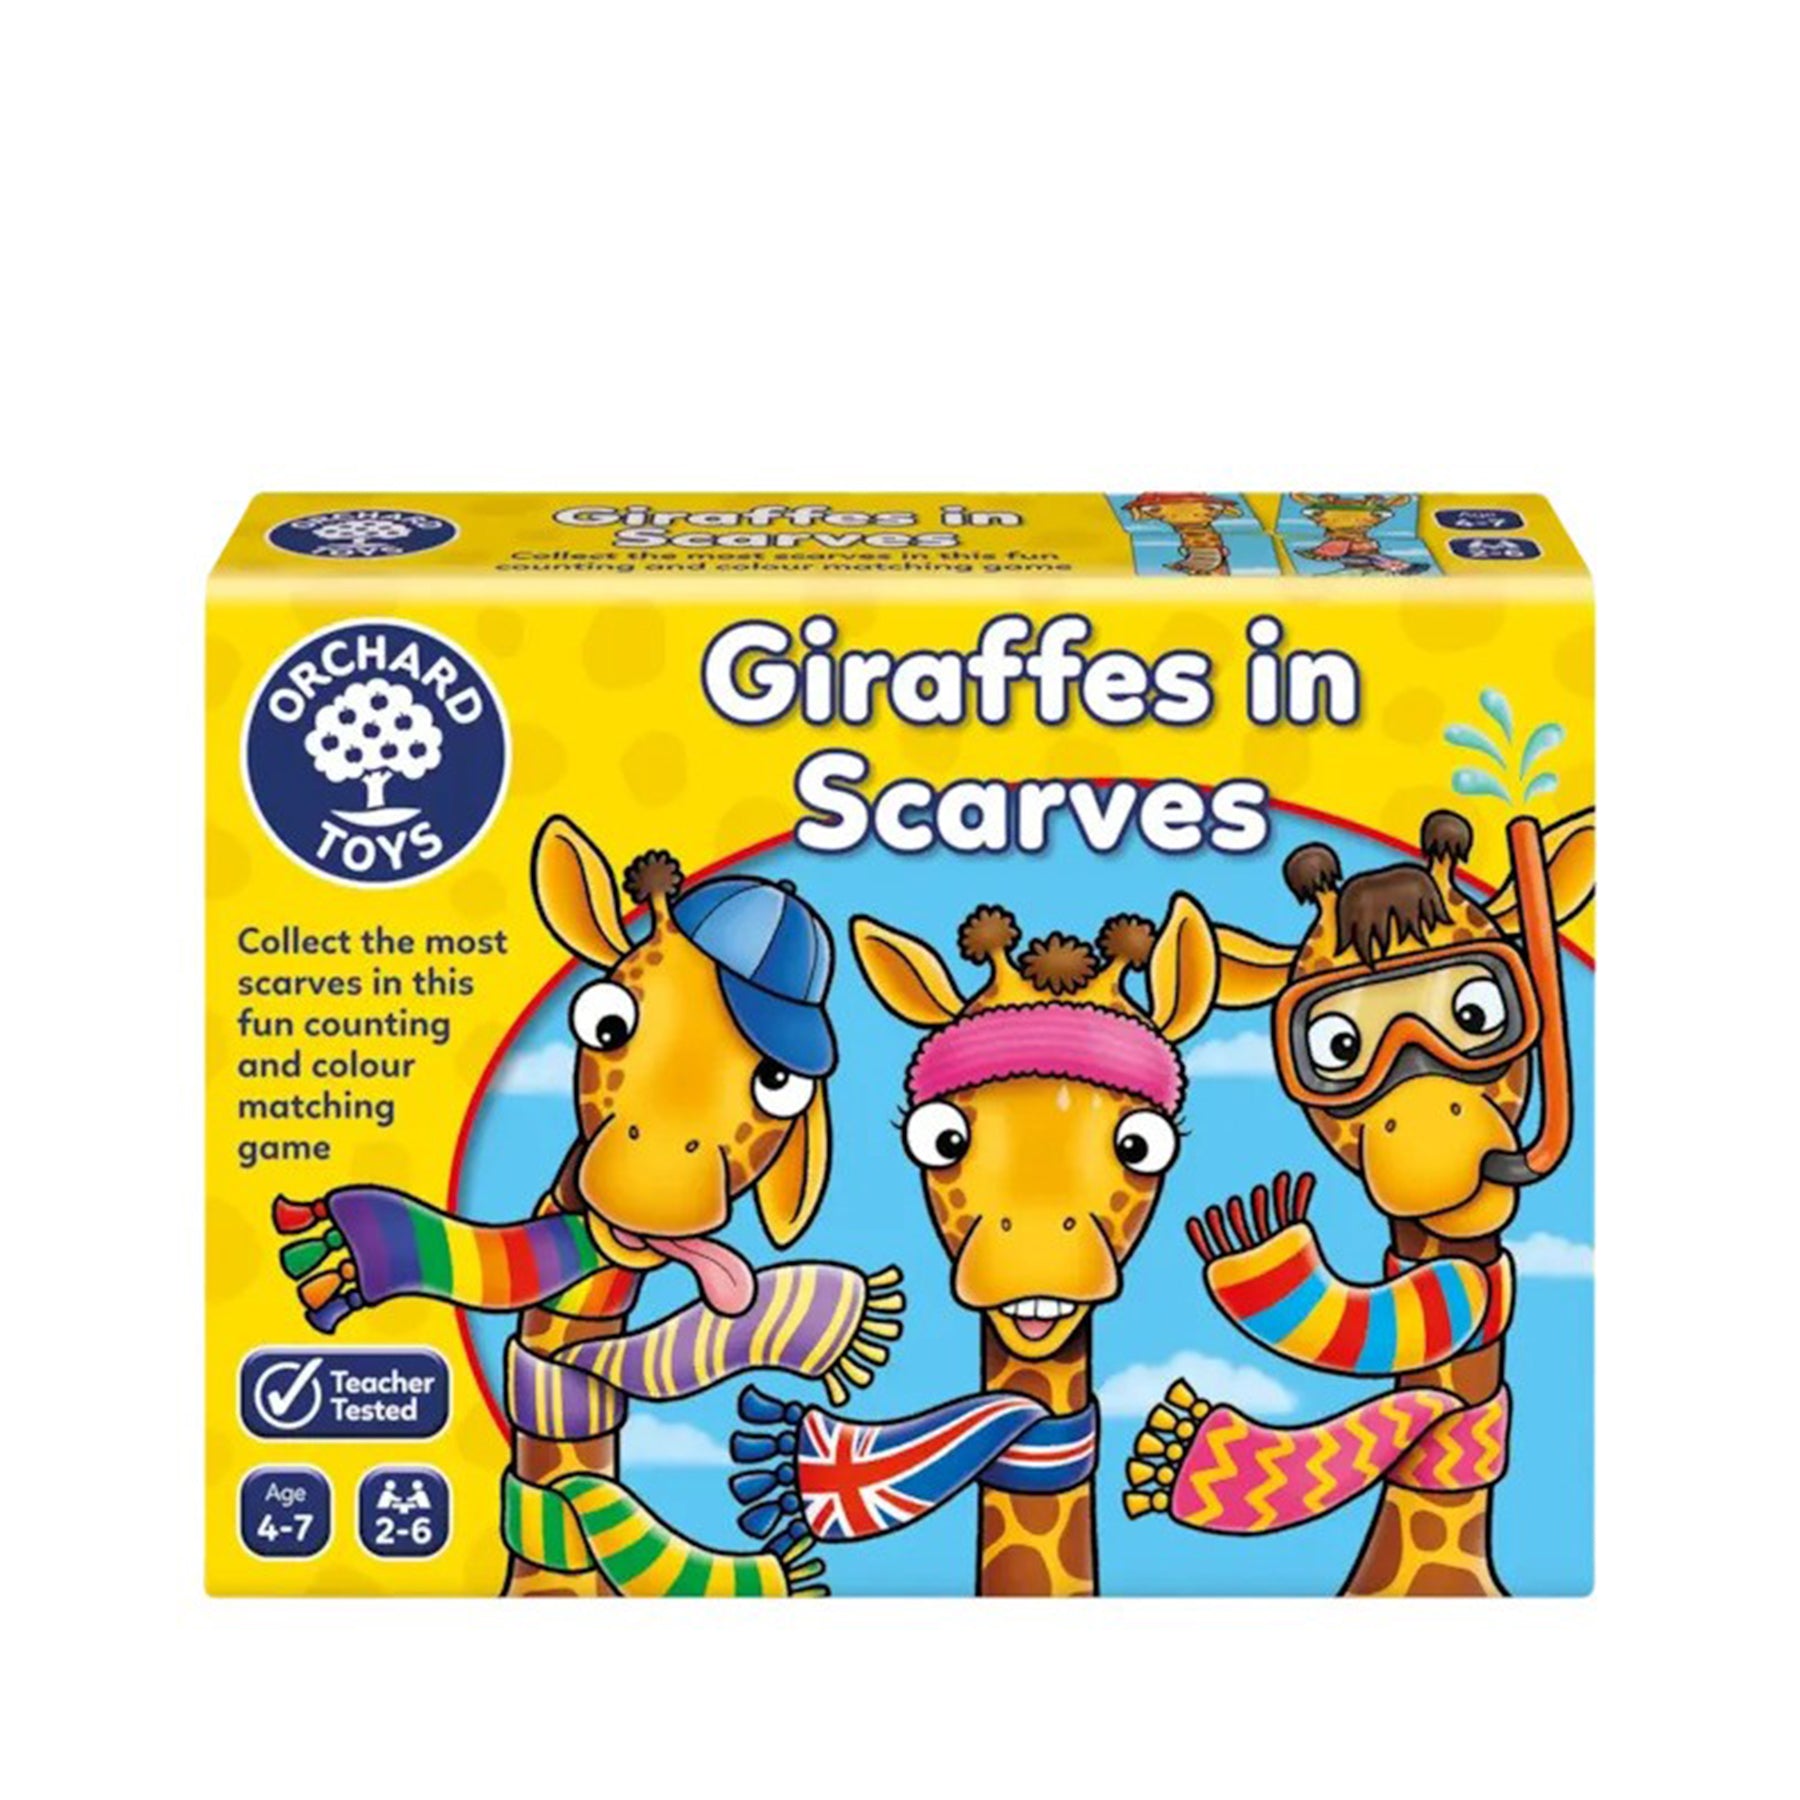 Giraffes in scarves game